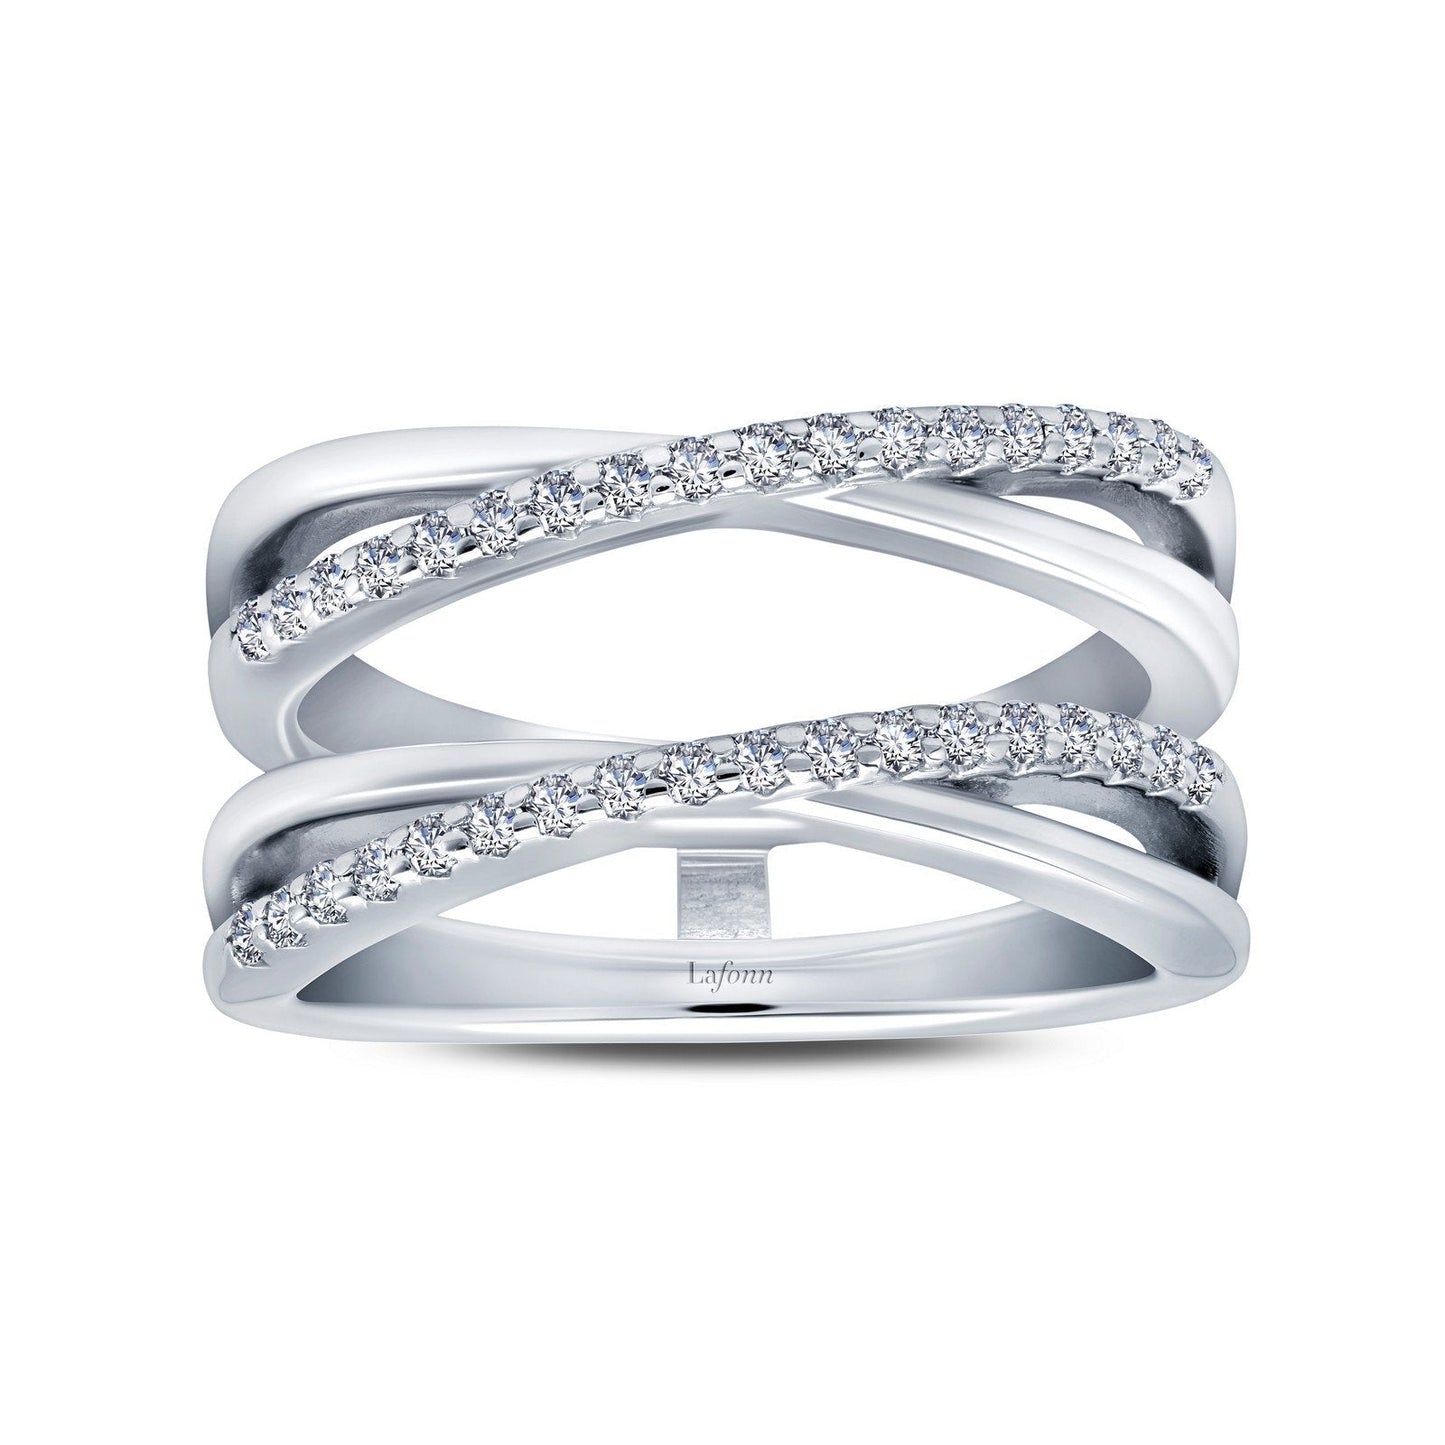 Lafonn Versatile Ring Enhancer Simulated Diamond RINGS Size 8 Platinum 0.36 CTS Approx. 11.0mm (W)